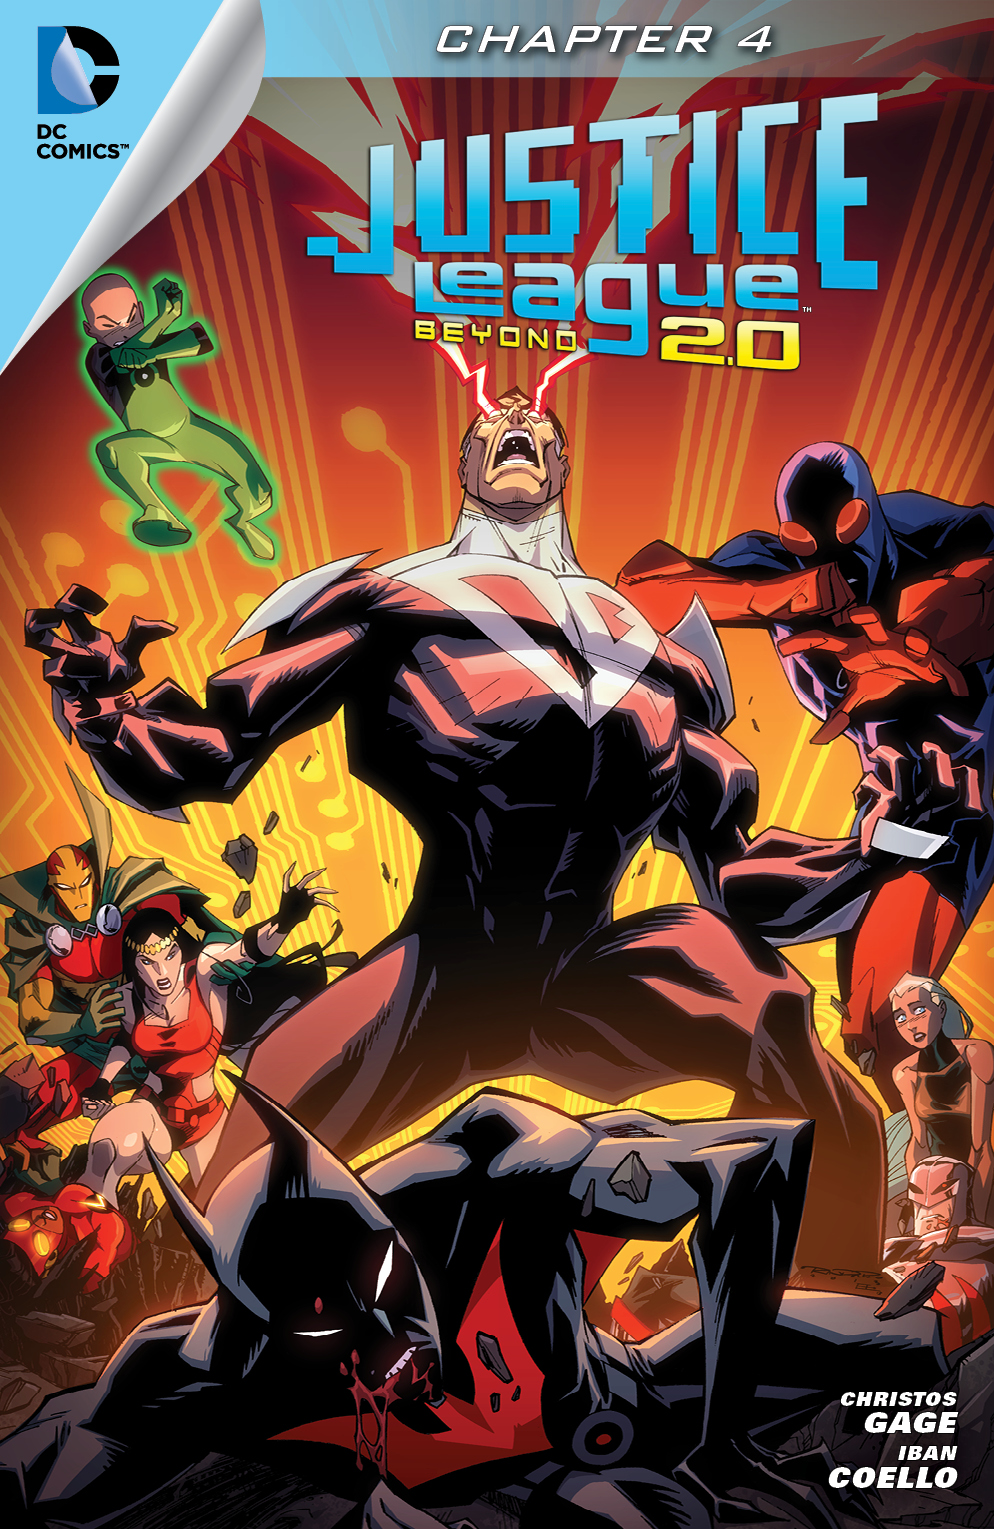 Justice League Beyond 2.0 #4 preview images